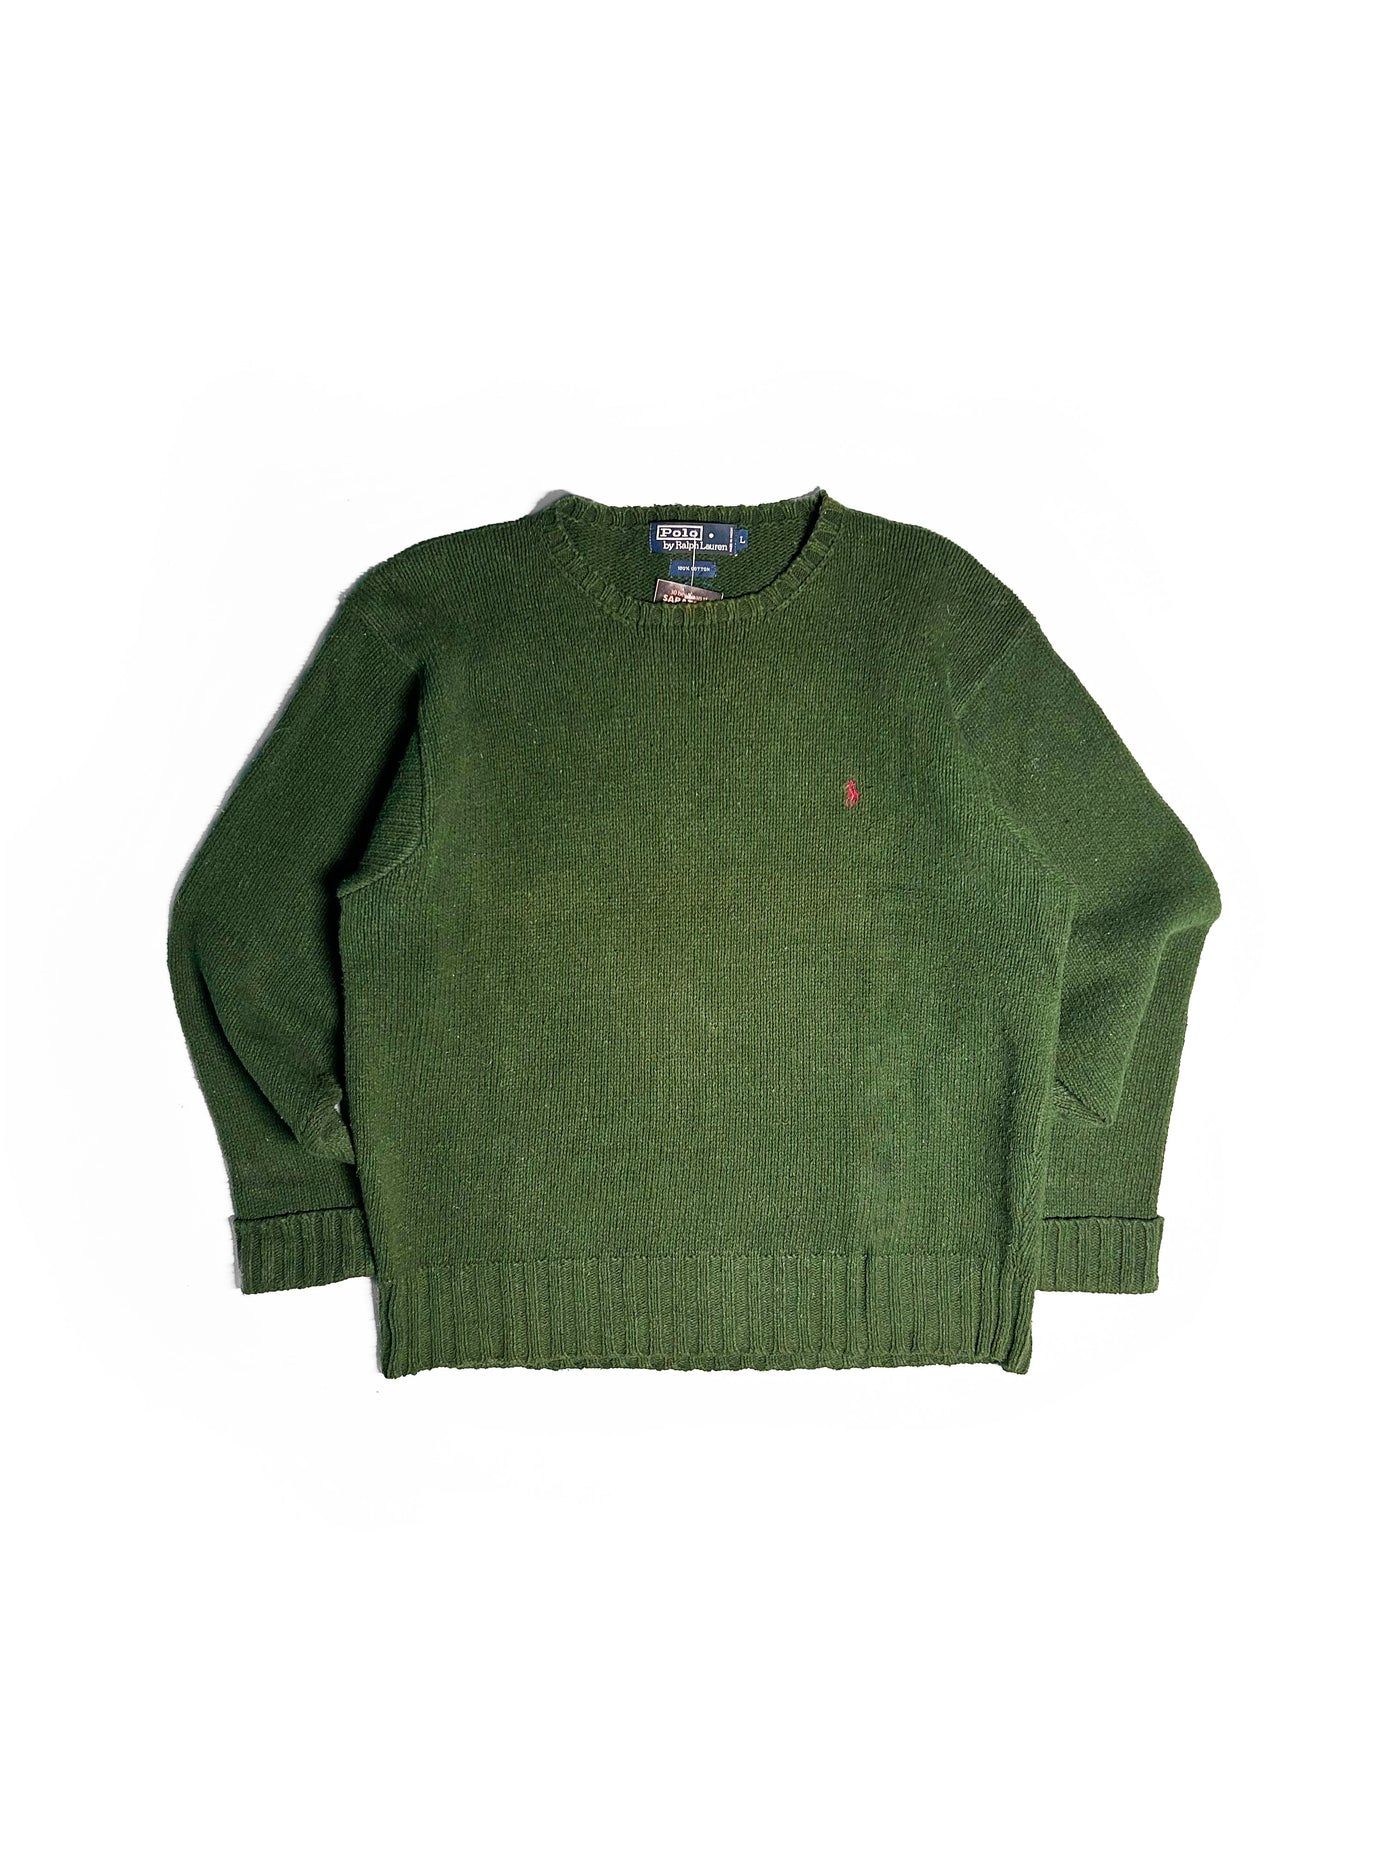 Vintage 90s Polo Ralph Lauren Golf Sweater